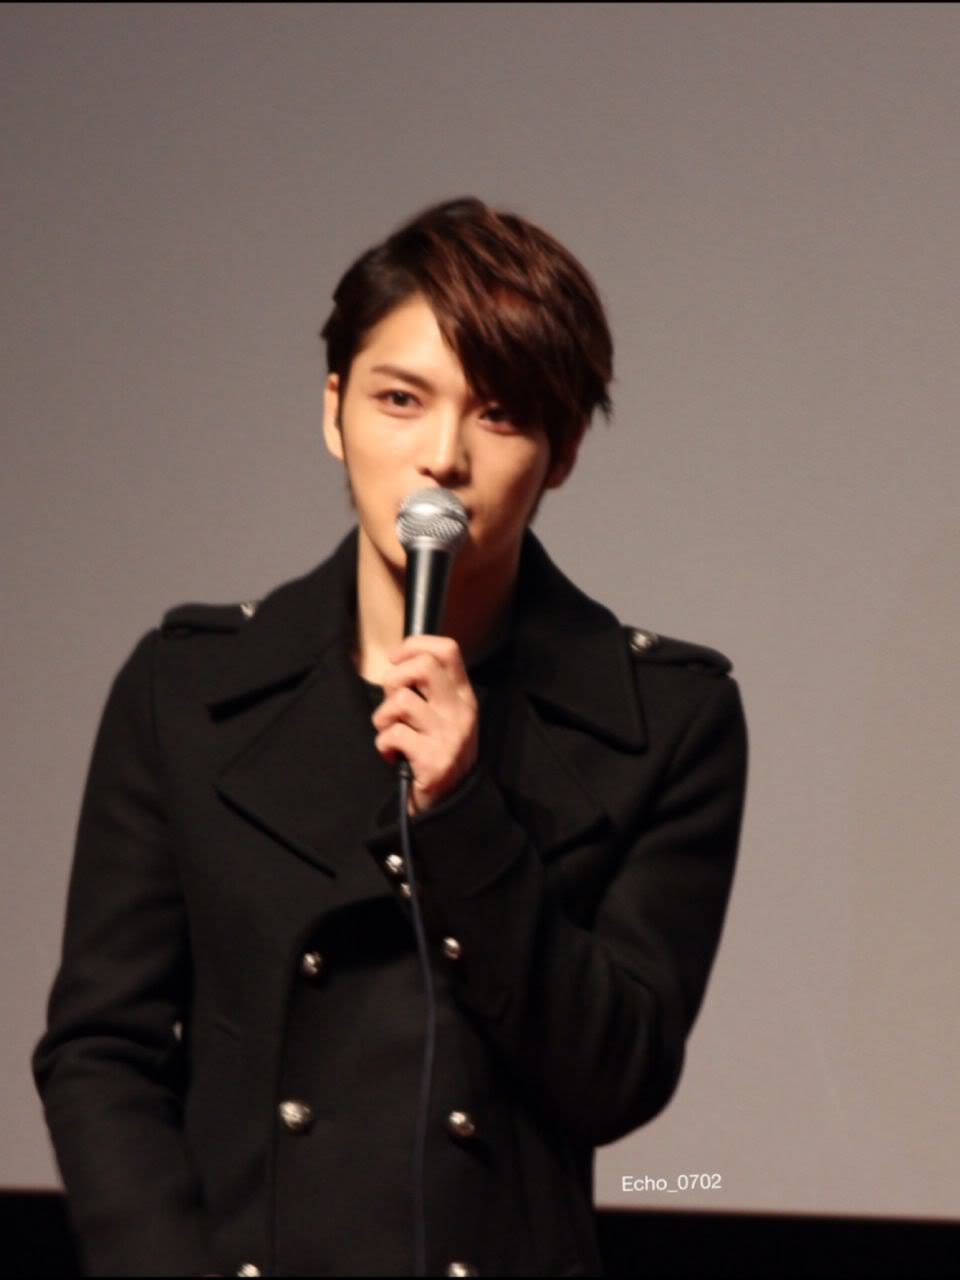 [30.11.12][Pics] Jaejoong - “Code Name Jackal” Stage Greeting (Day 7)   17ca24a4462309f7f16b18f5720e0cf3d6cad655